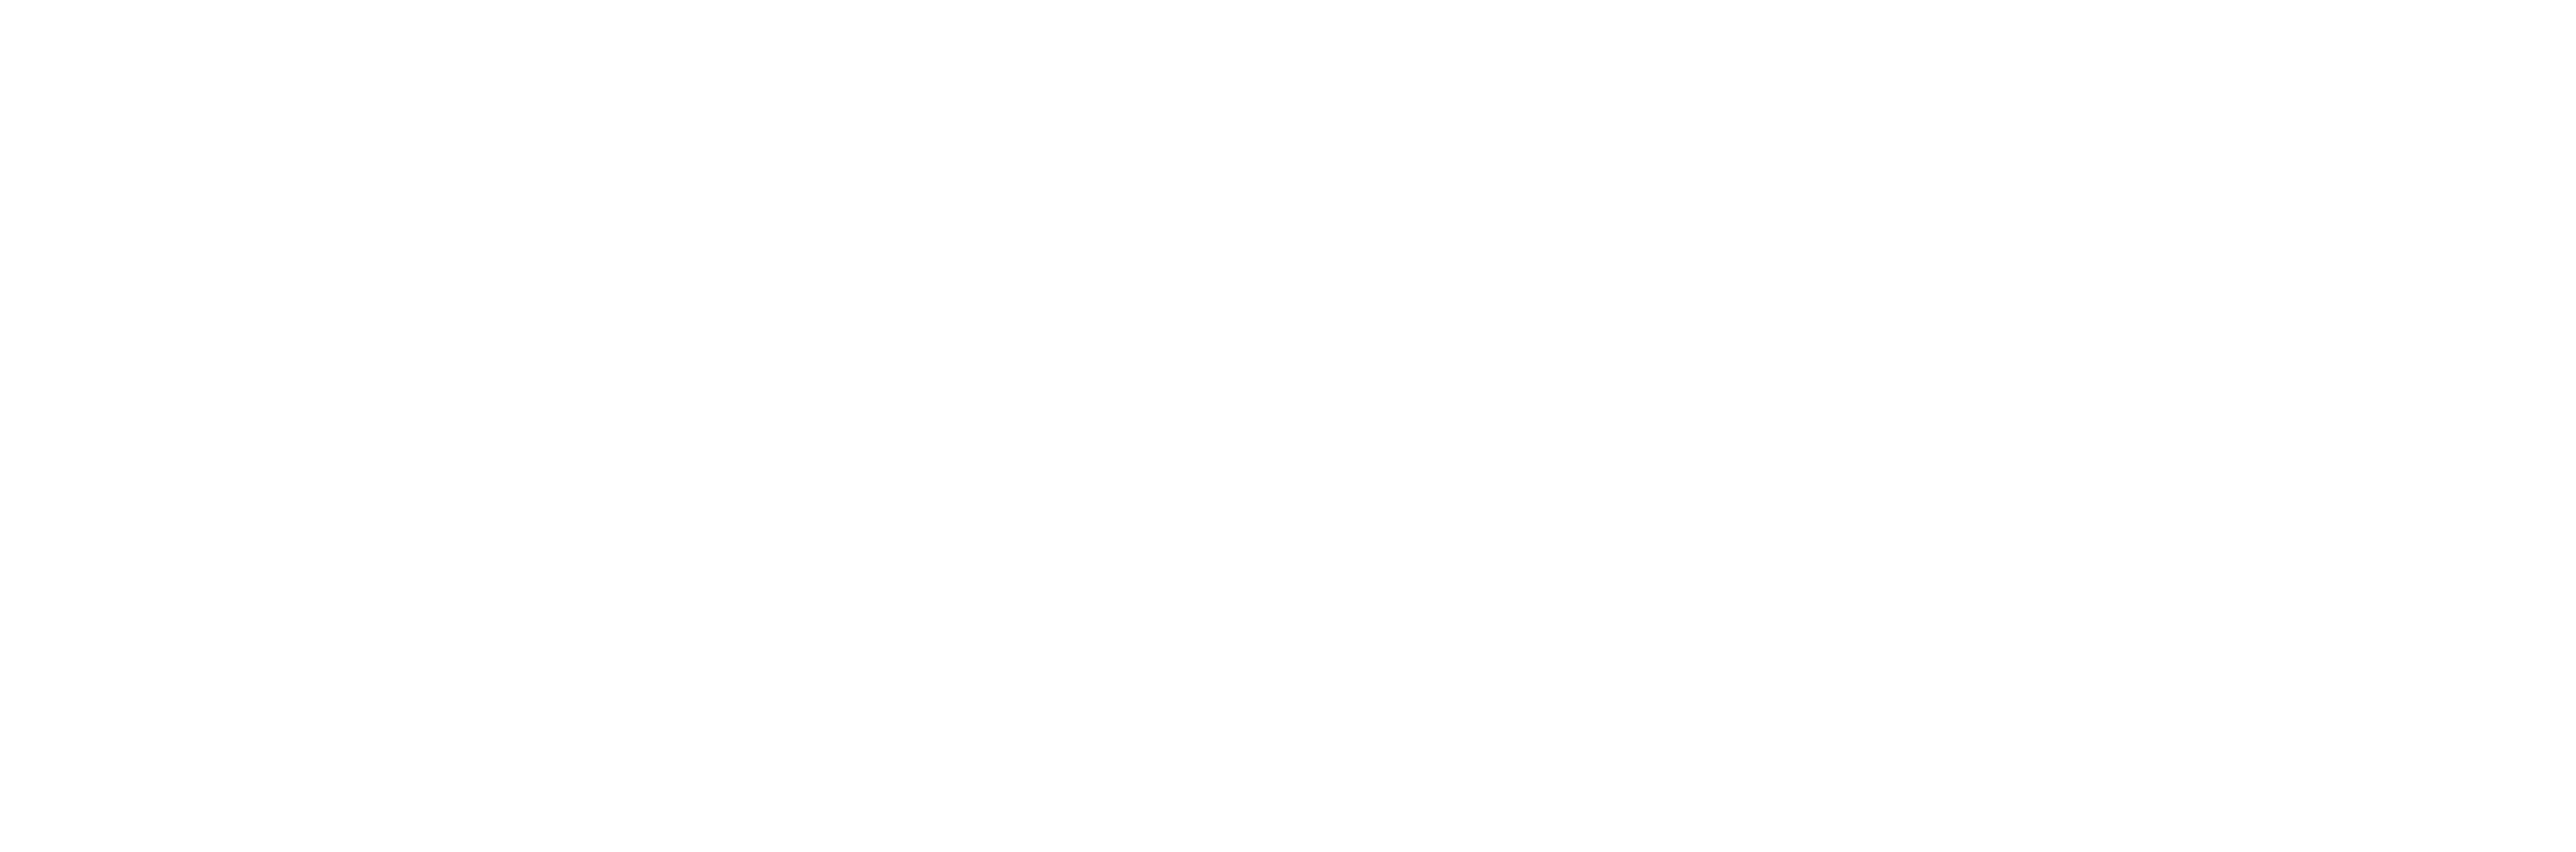 Junior Achievement of Michigan Great Lakes